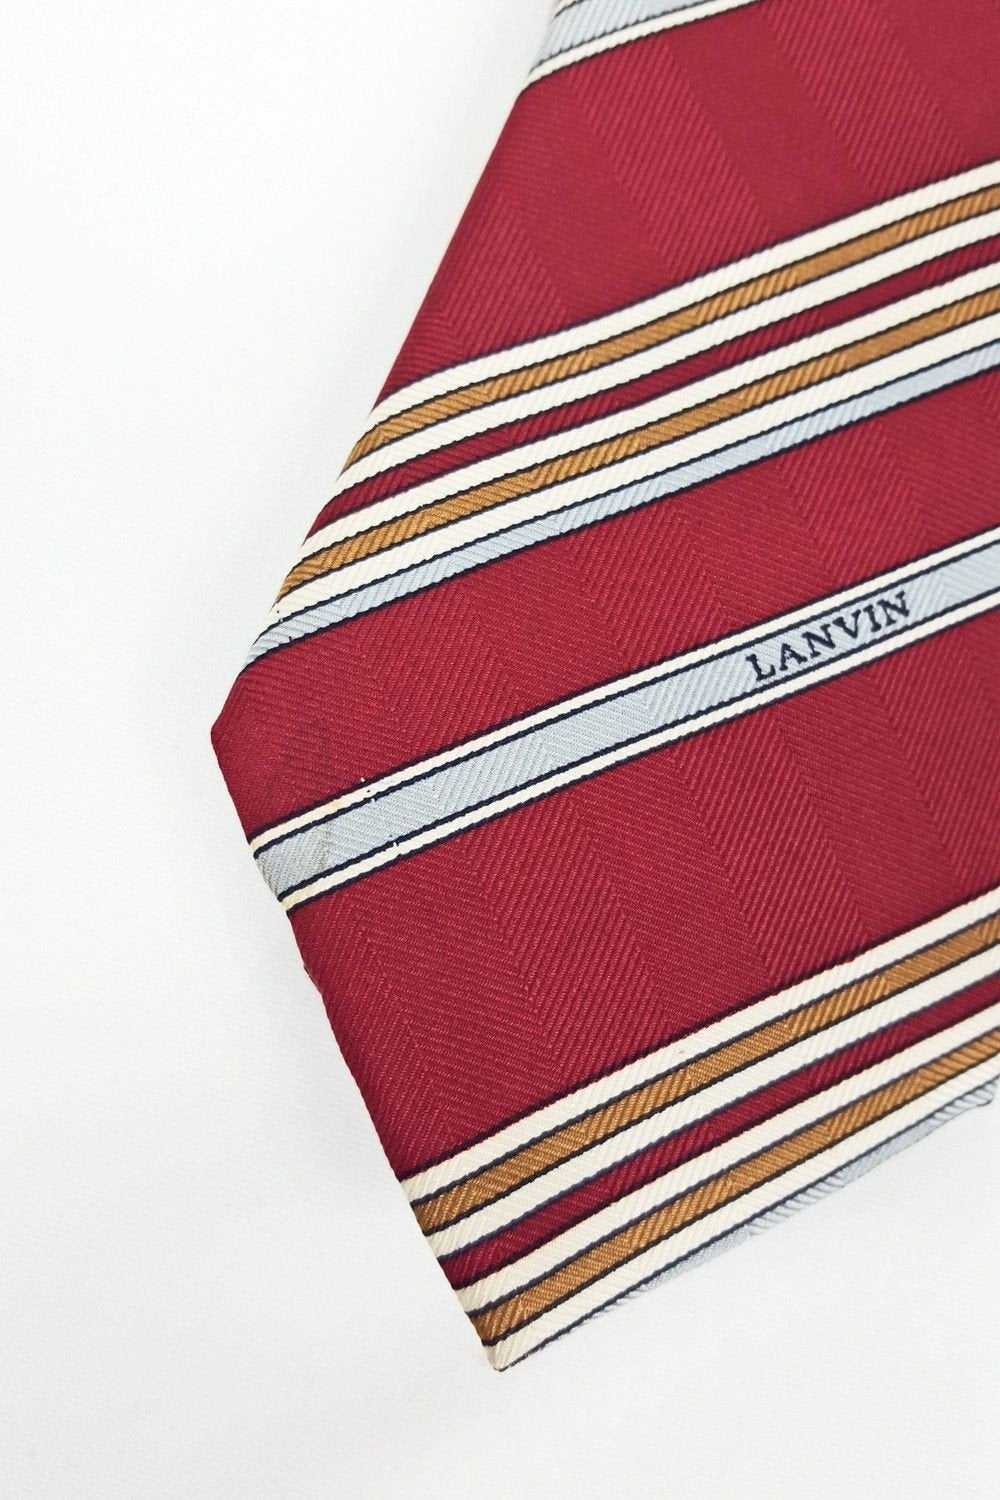 VINTAGE LANVIN 100% Silk Red Blue Brown Stripe Tie-LANVIN-The Freperie